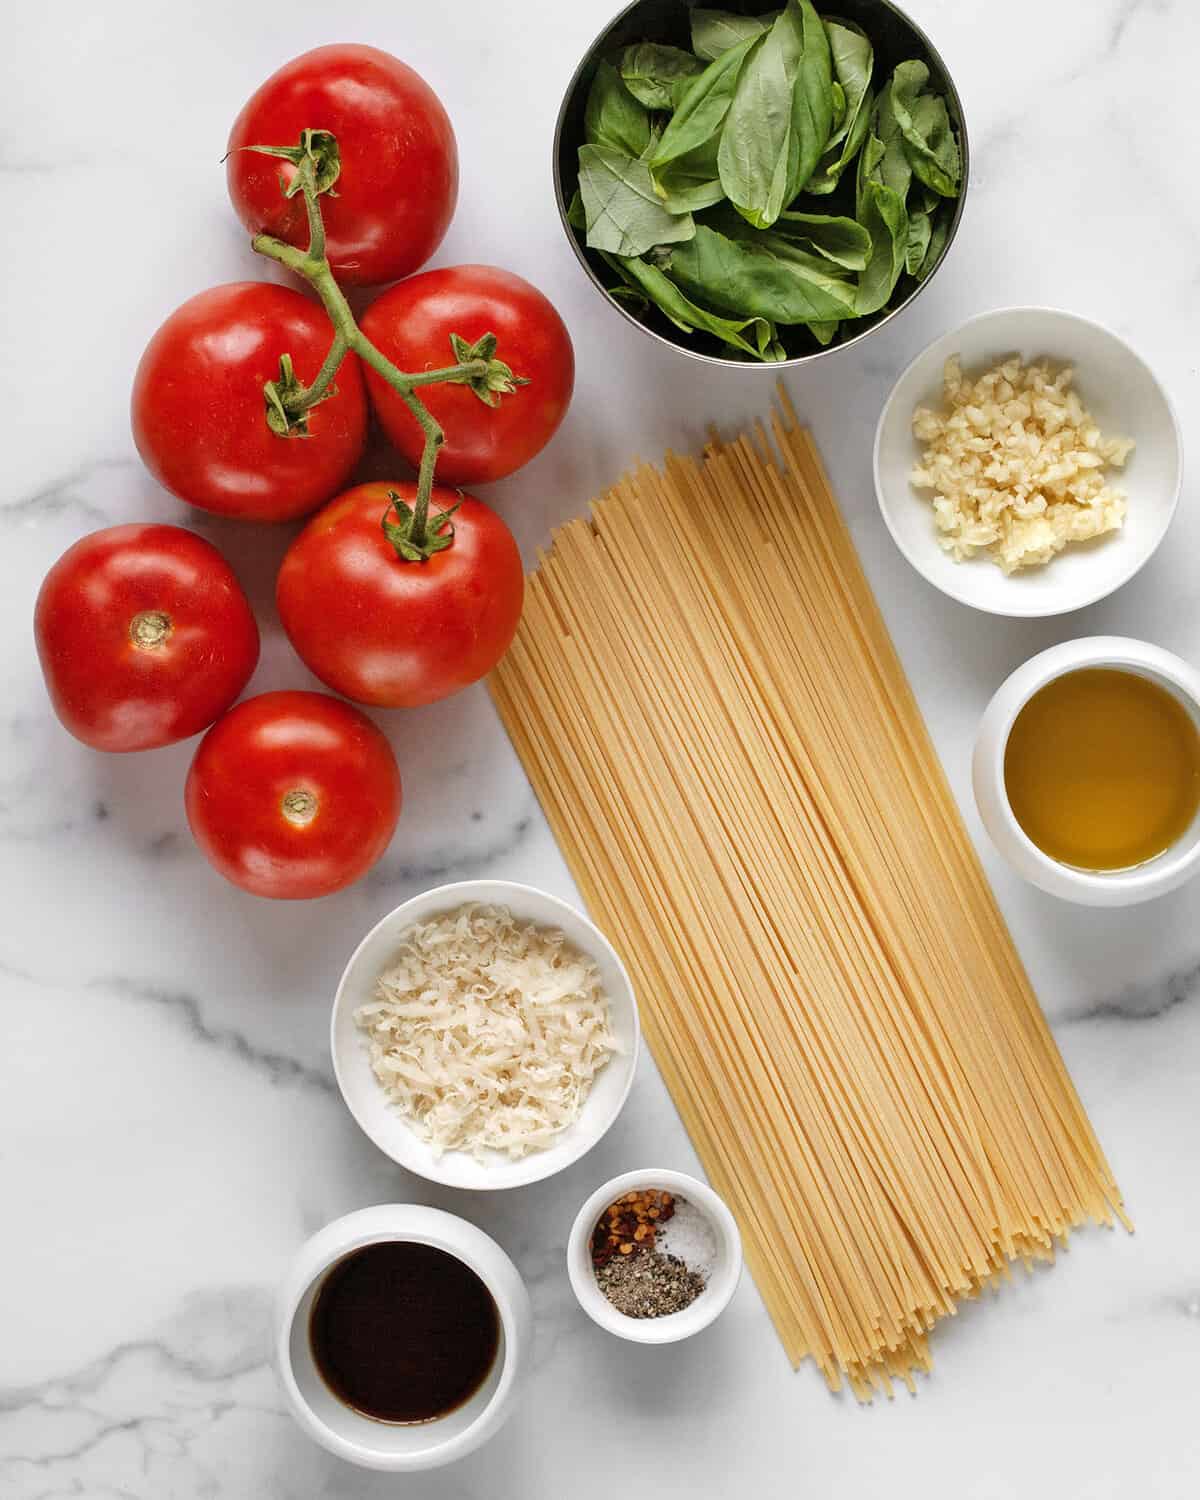 Ingredients including tomatoes, basil, spaghetti, garlic, basil, parmesan, balsamic vinegar, salt and pepper.